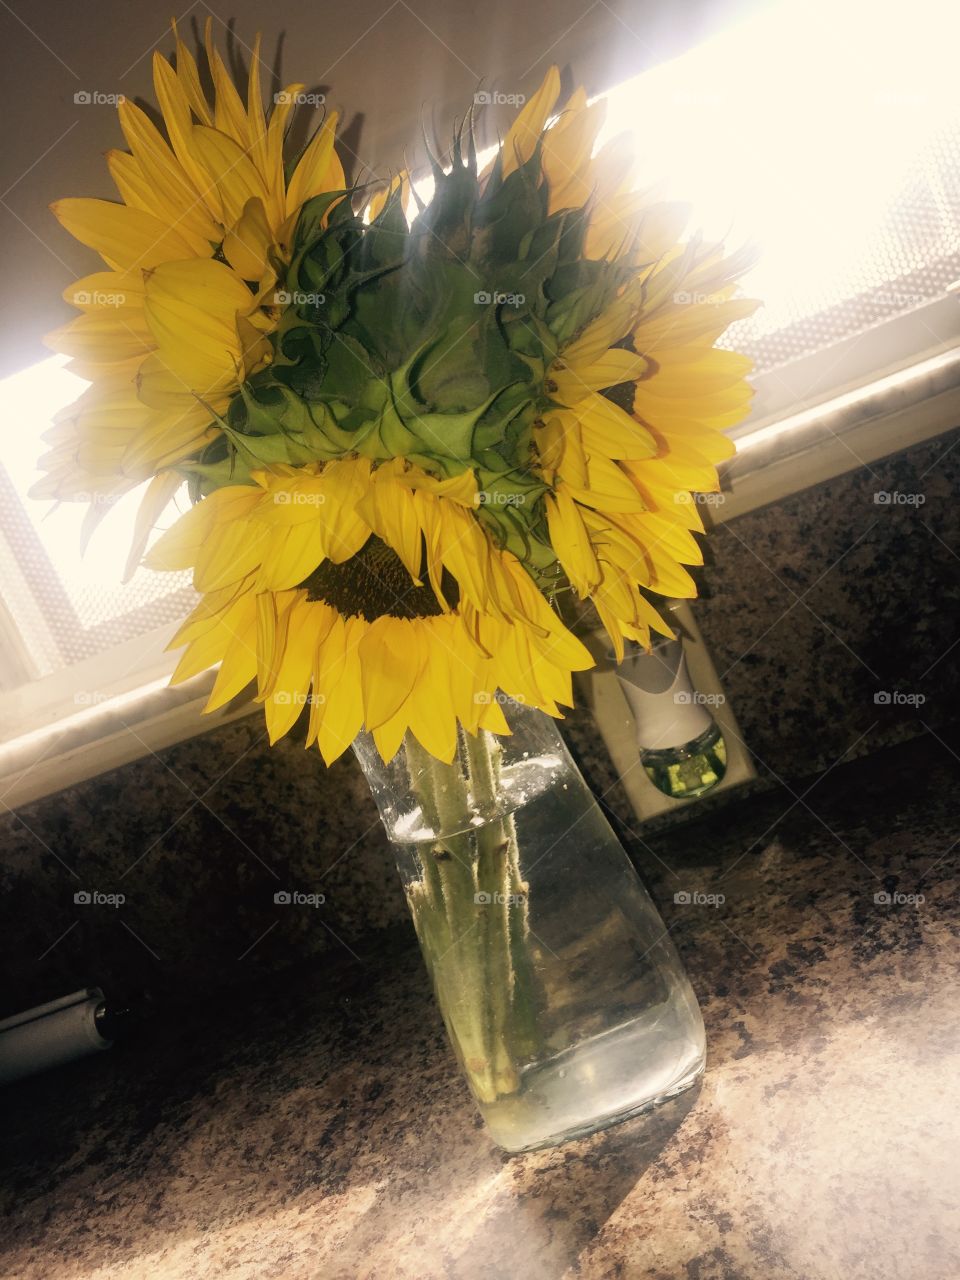 Sunflowers power 🌻